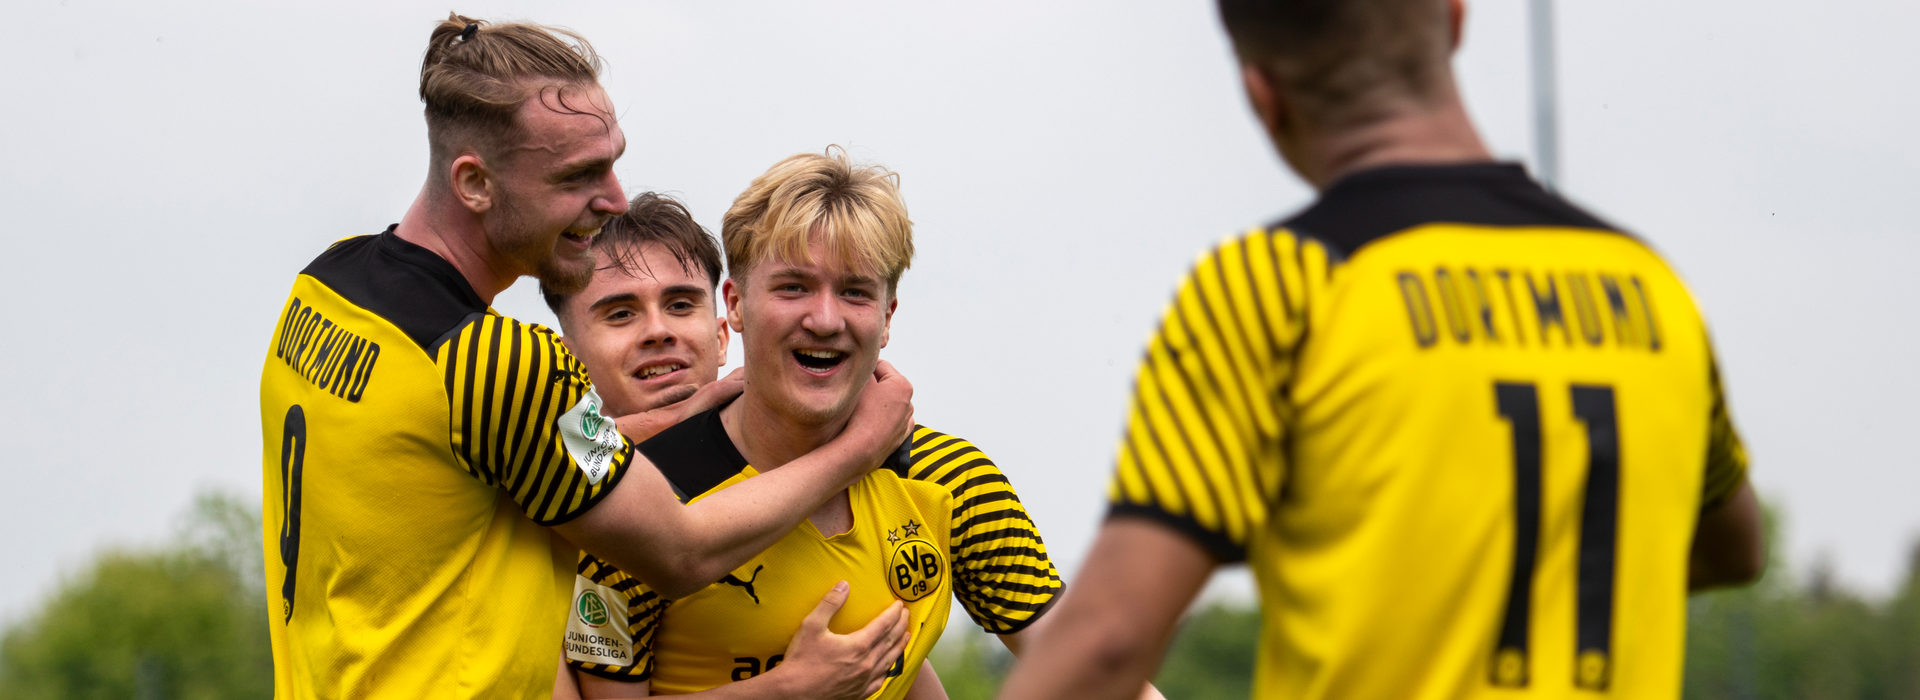 Finale am Freitag gegen Stuttgart - U19 will den Pokal 